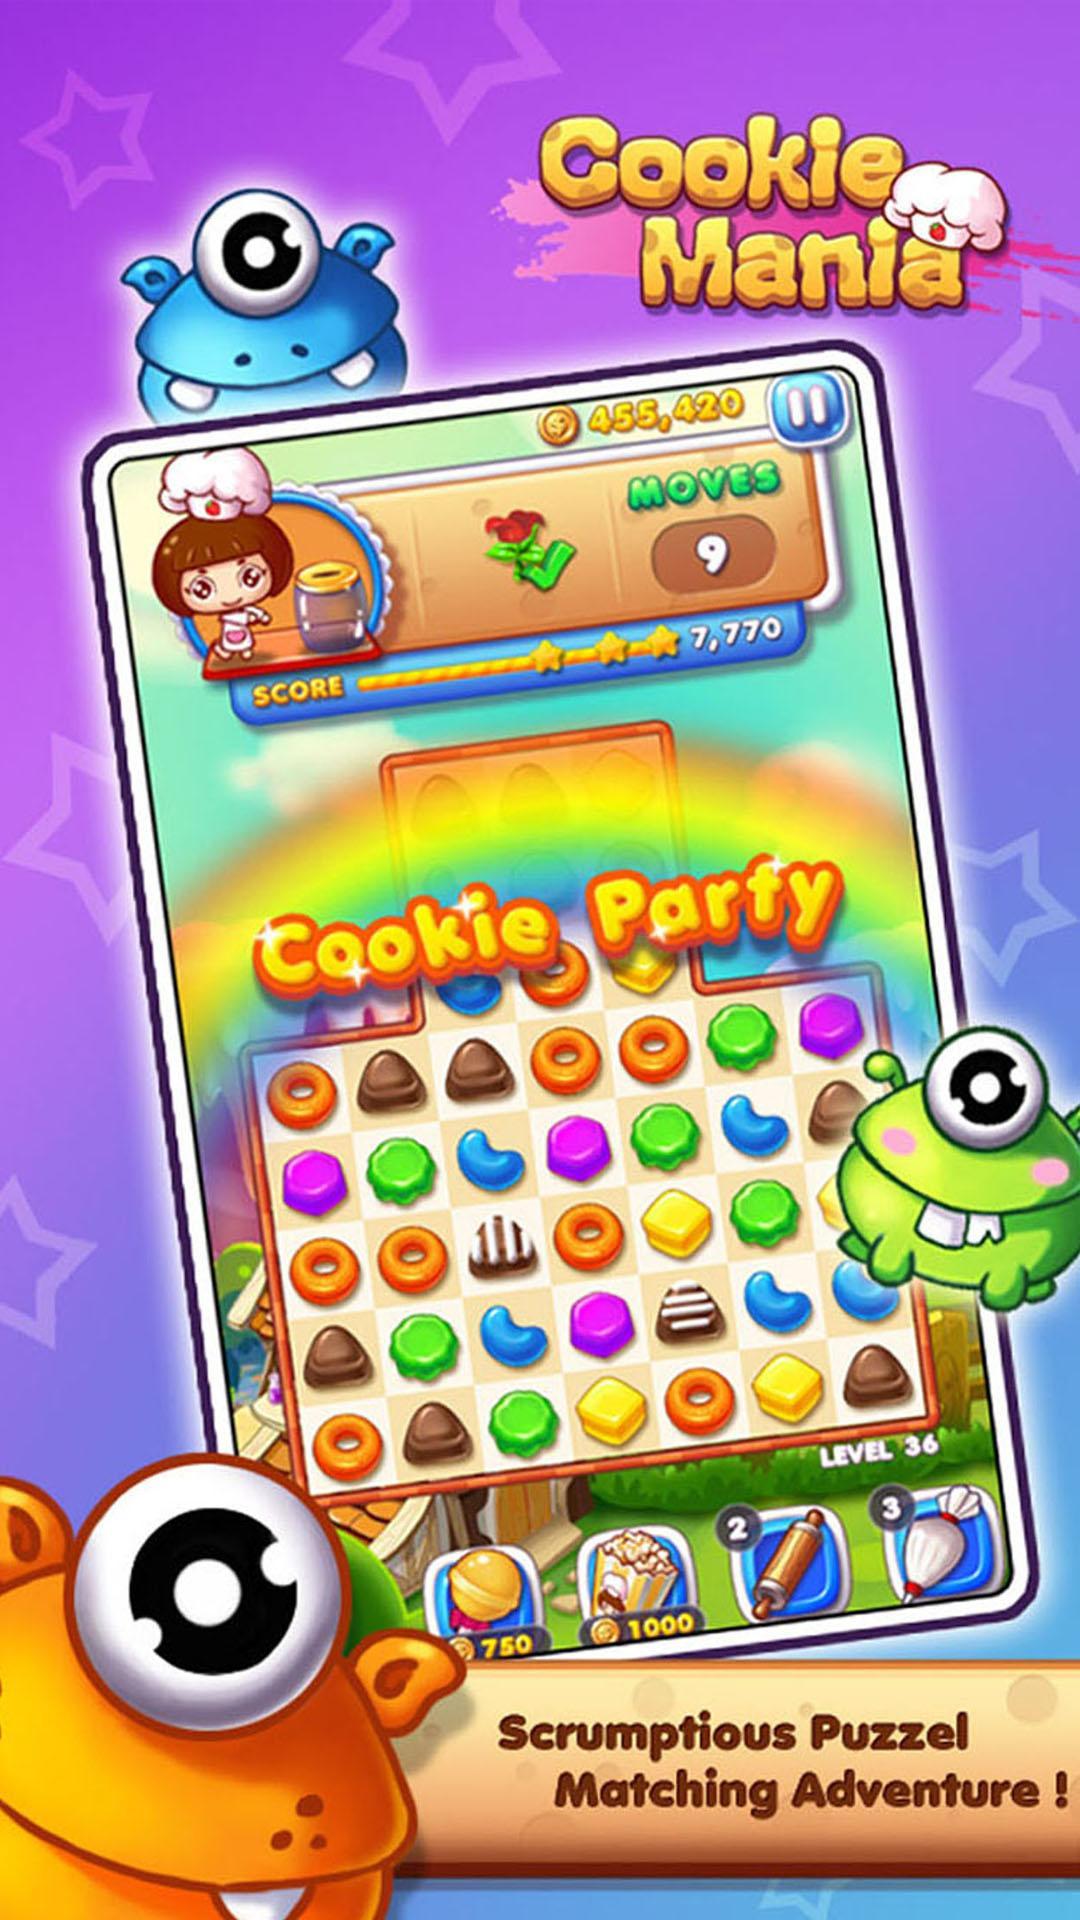 Cookie Mania Match-3 Sweet Game 2.5.8 Screenshot 7